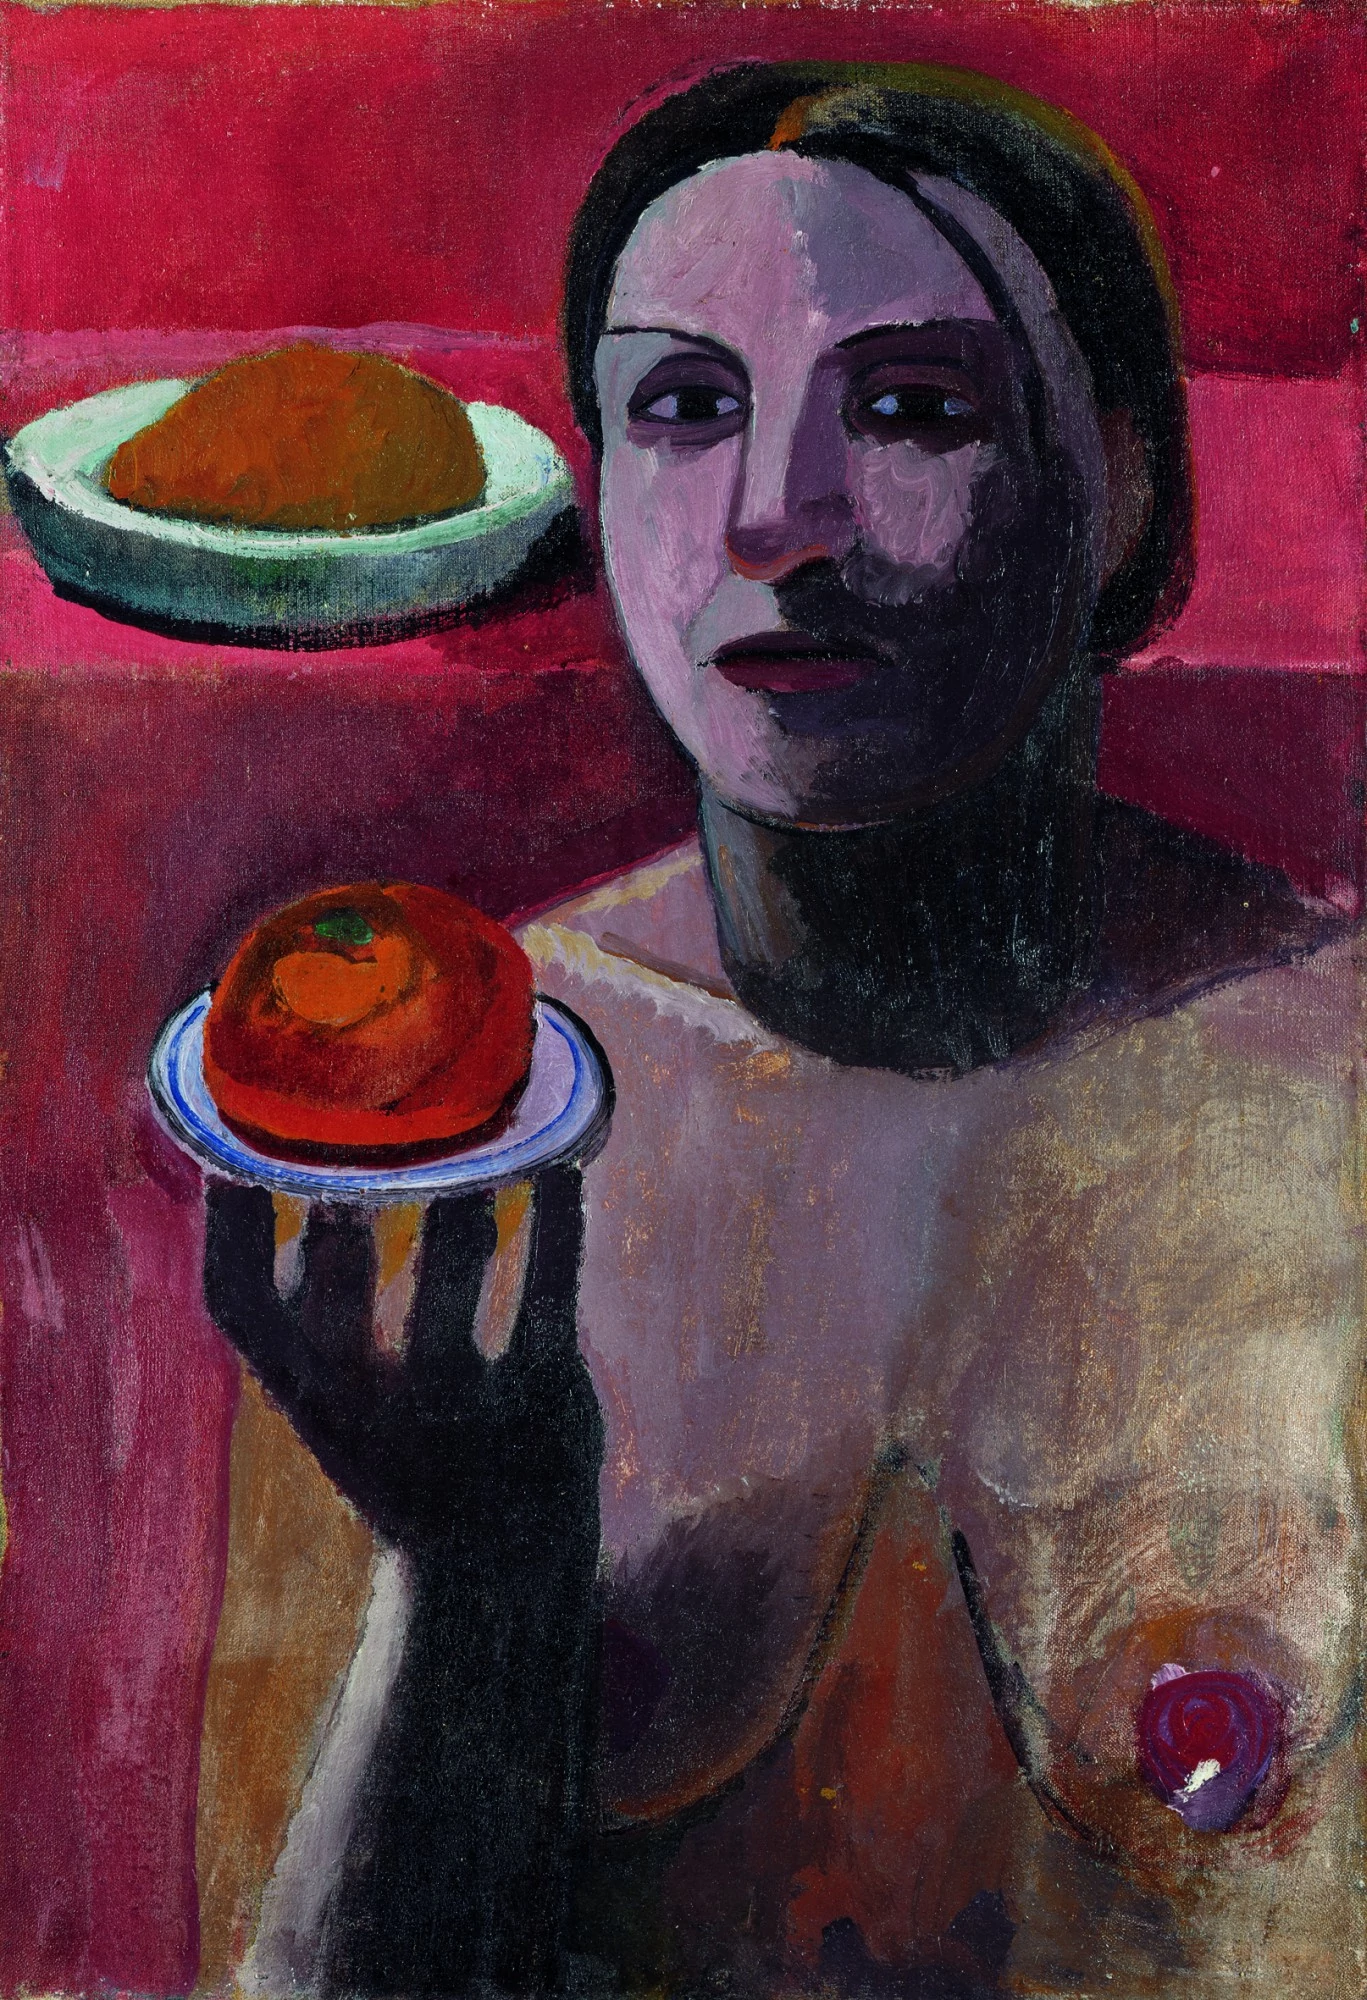 Italian woman with a plate in her raised hand, Paula Modersohn-Becker